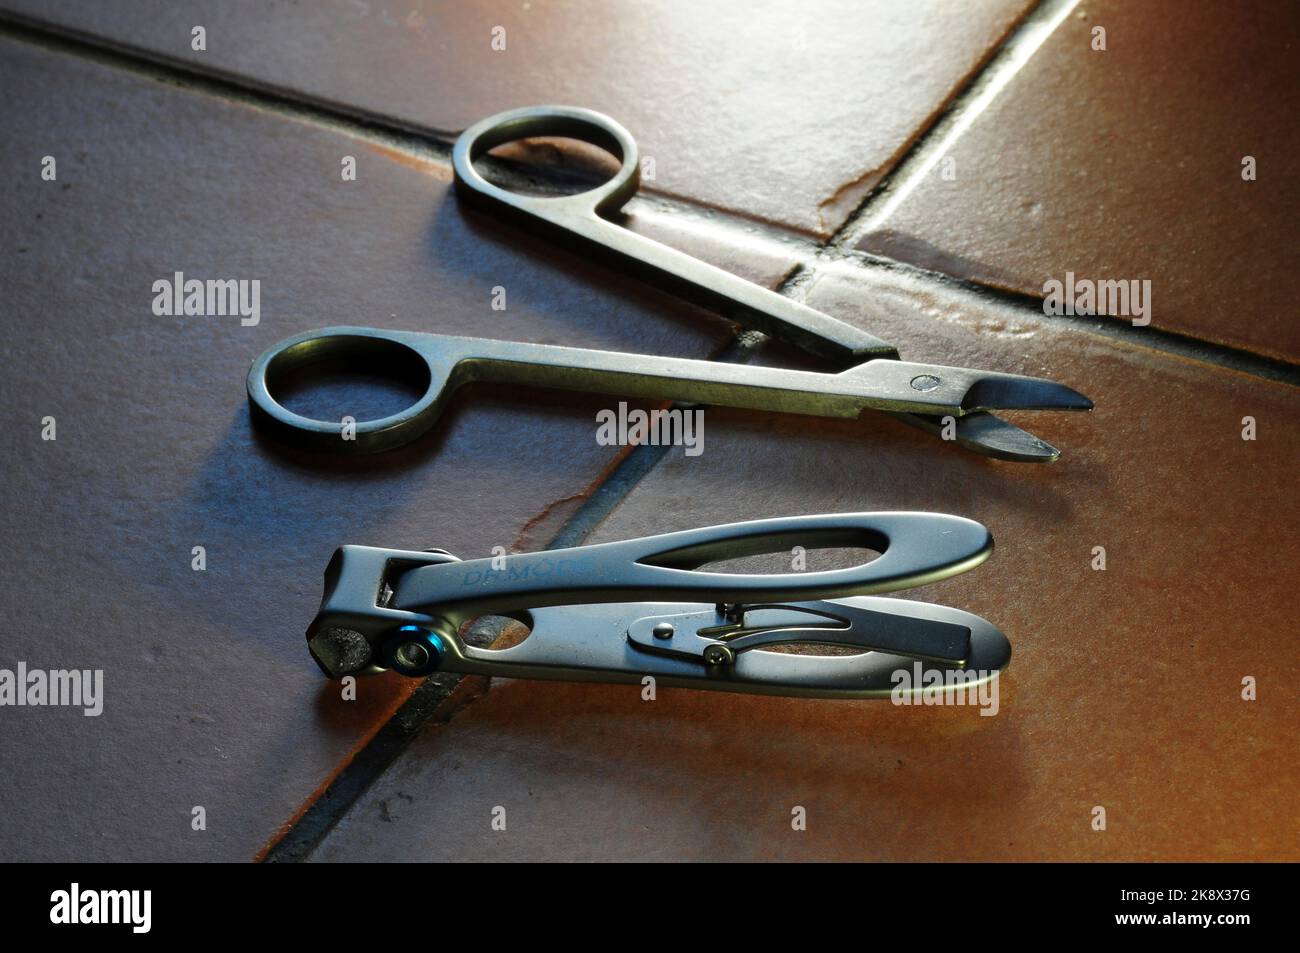 https://c8.alamy.com/comp/2K8X37G/fingernail-scissors-and-toenail-clippers-2K8X37G.jpg